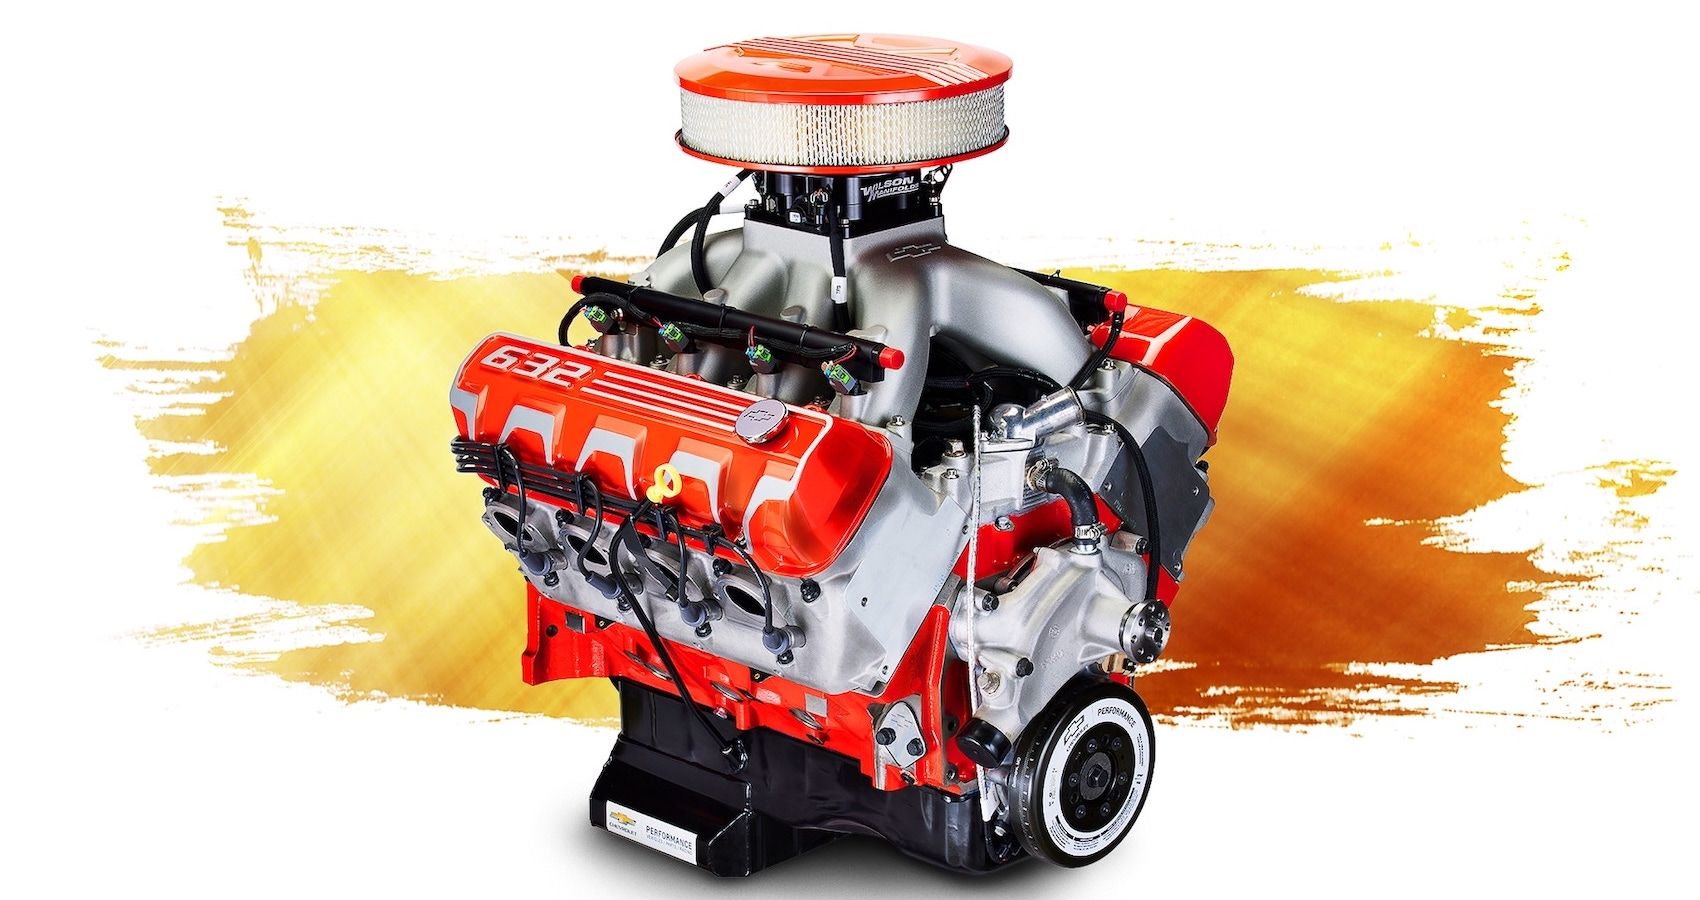 Chevrolet ZZ632/1000 Big-Block V8 Crate Engine